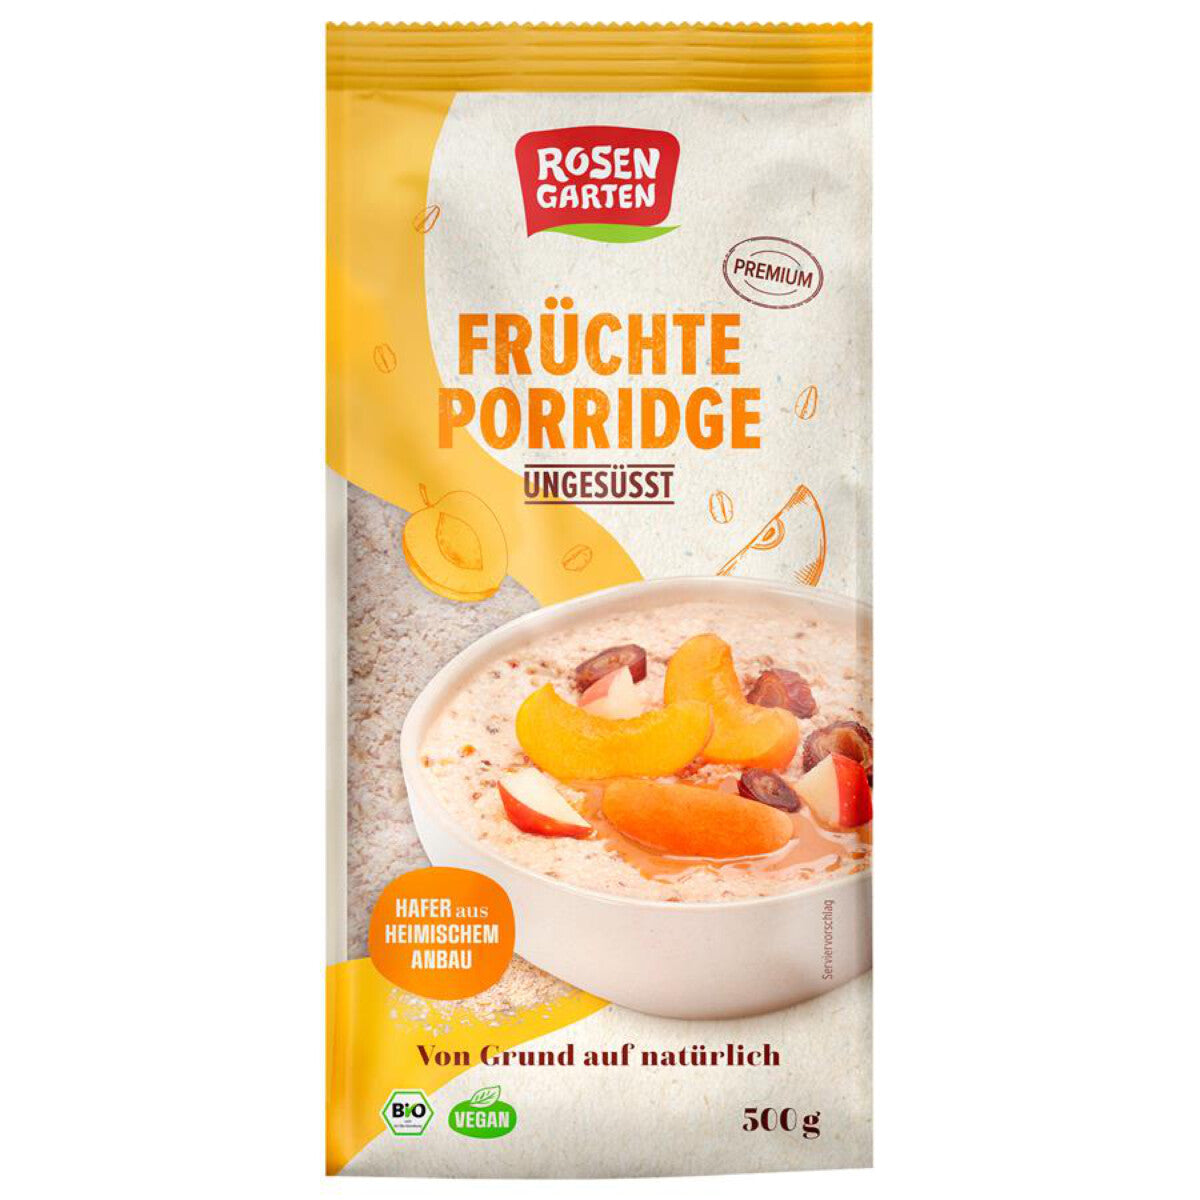 ROSENGARTEN Früchte-Porridge ungesüßt - 500 g